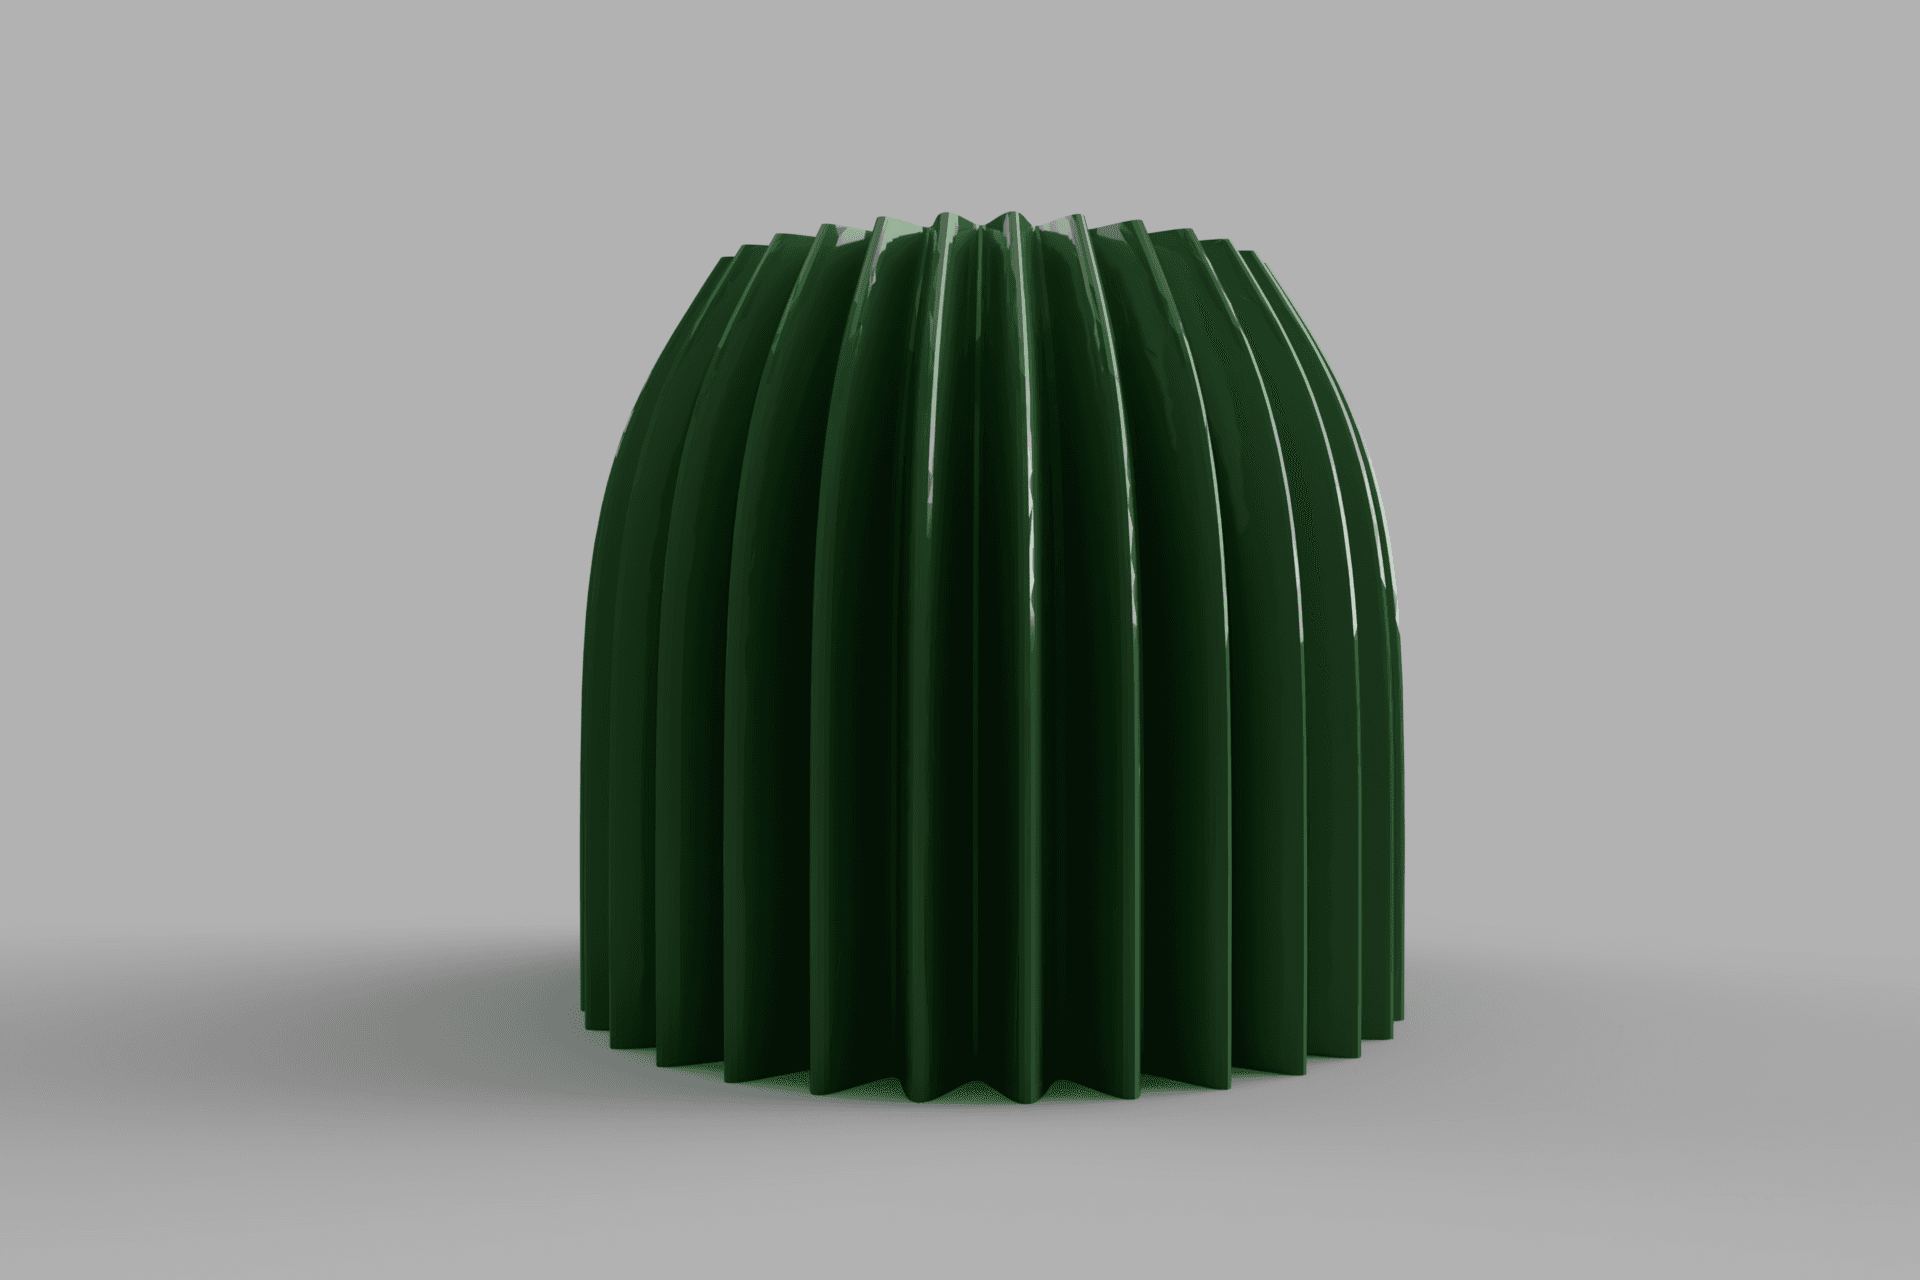 New Cactus Pencil Holder / Vase 3d model